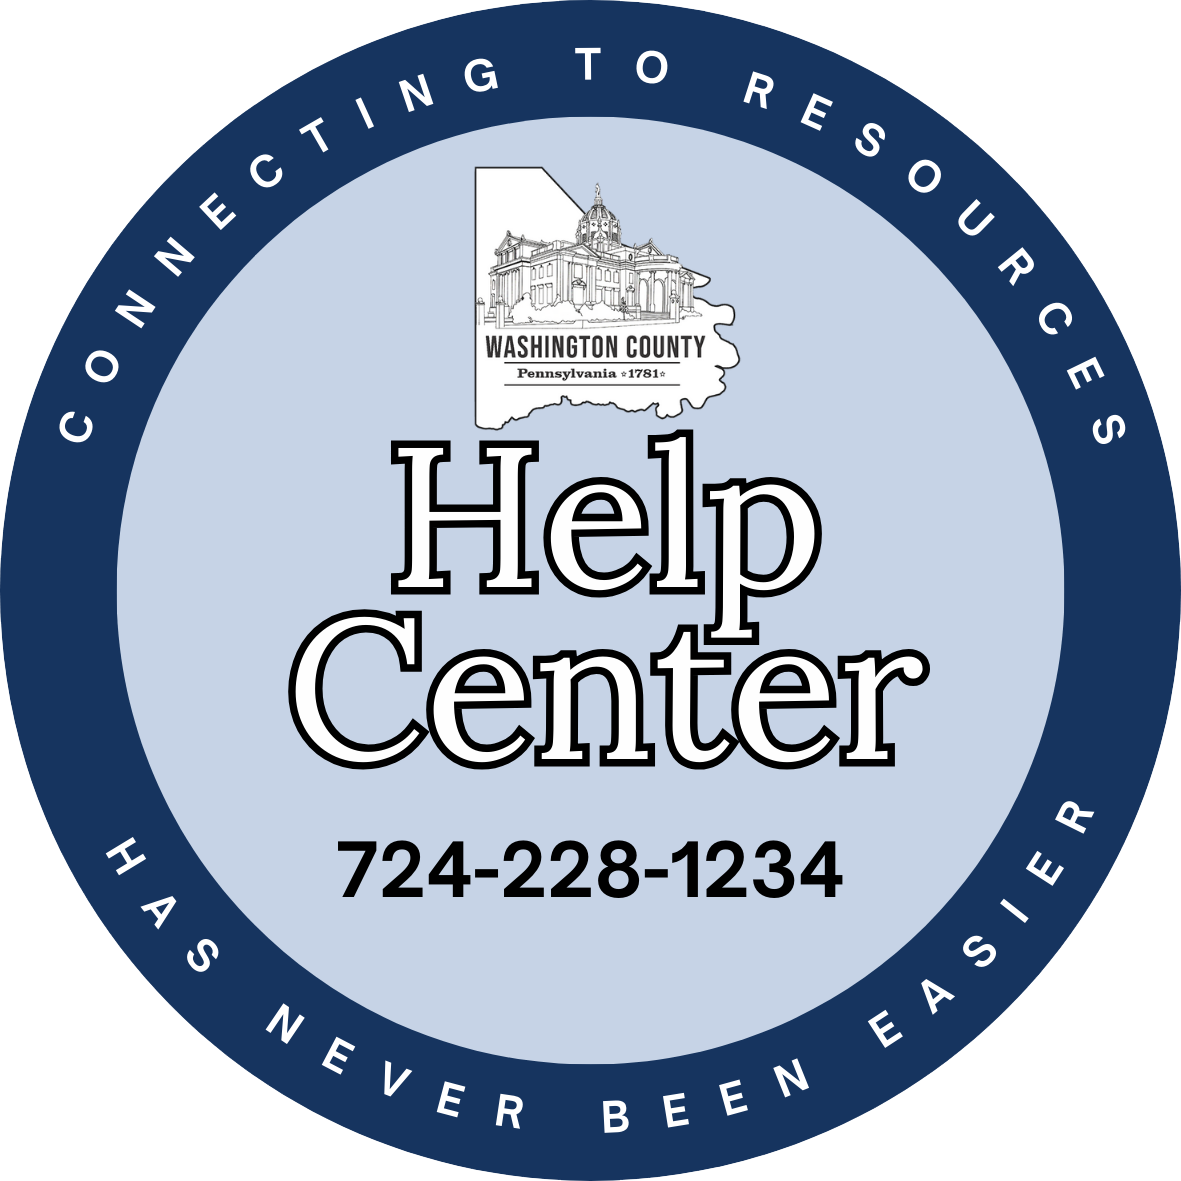 Help Center: 724-228-1234